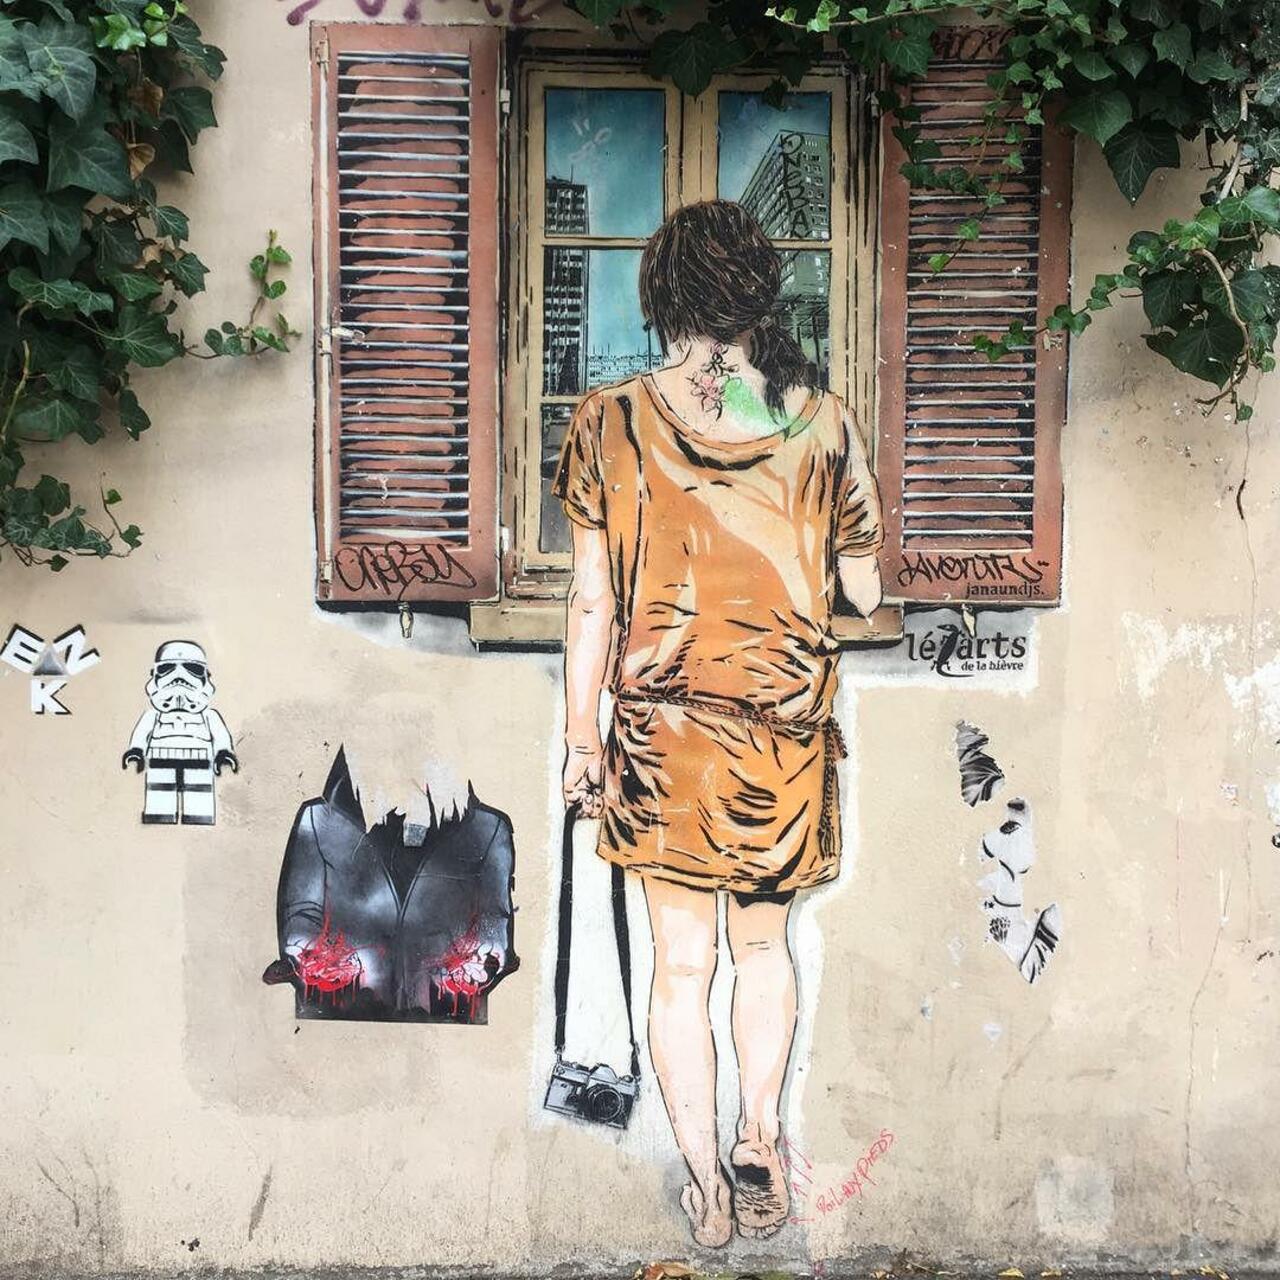 #Paris #graffiti photo by @catscoffeecreativity http://ift.tt/1jrNVls #StreetArt http://t.co/TV4LM2nzhm